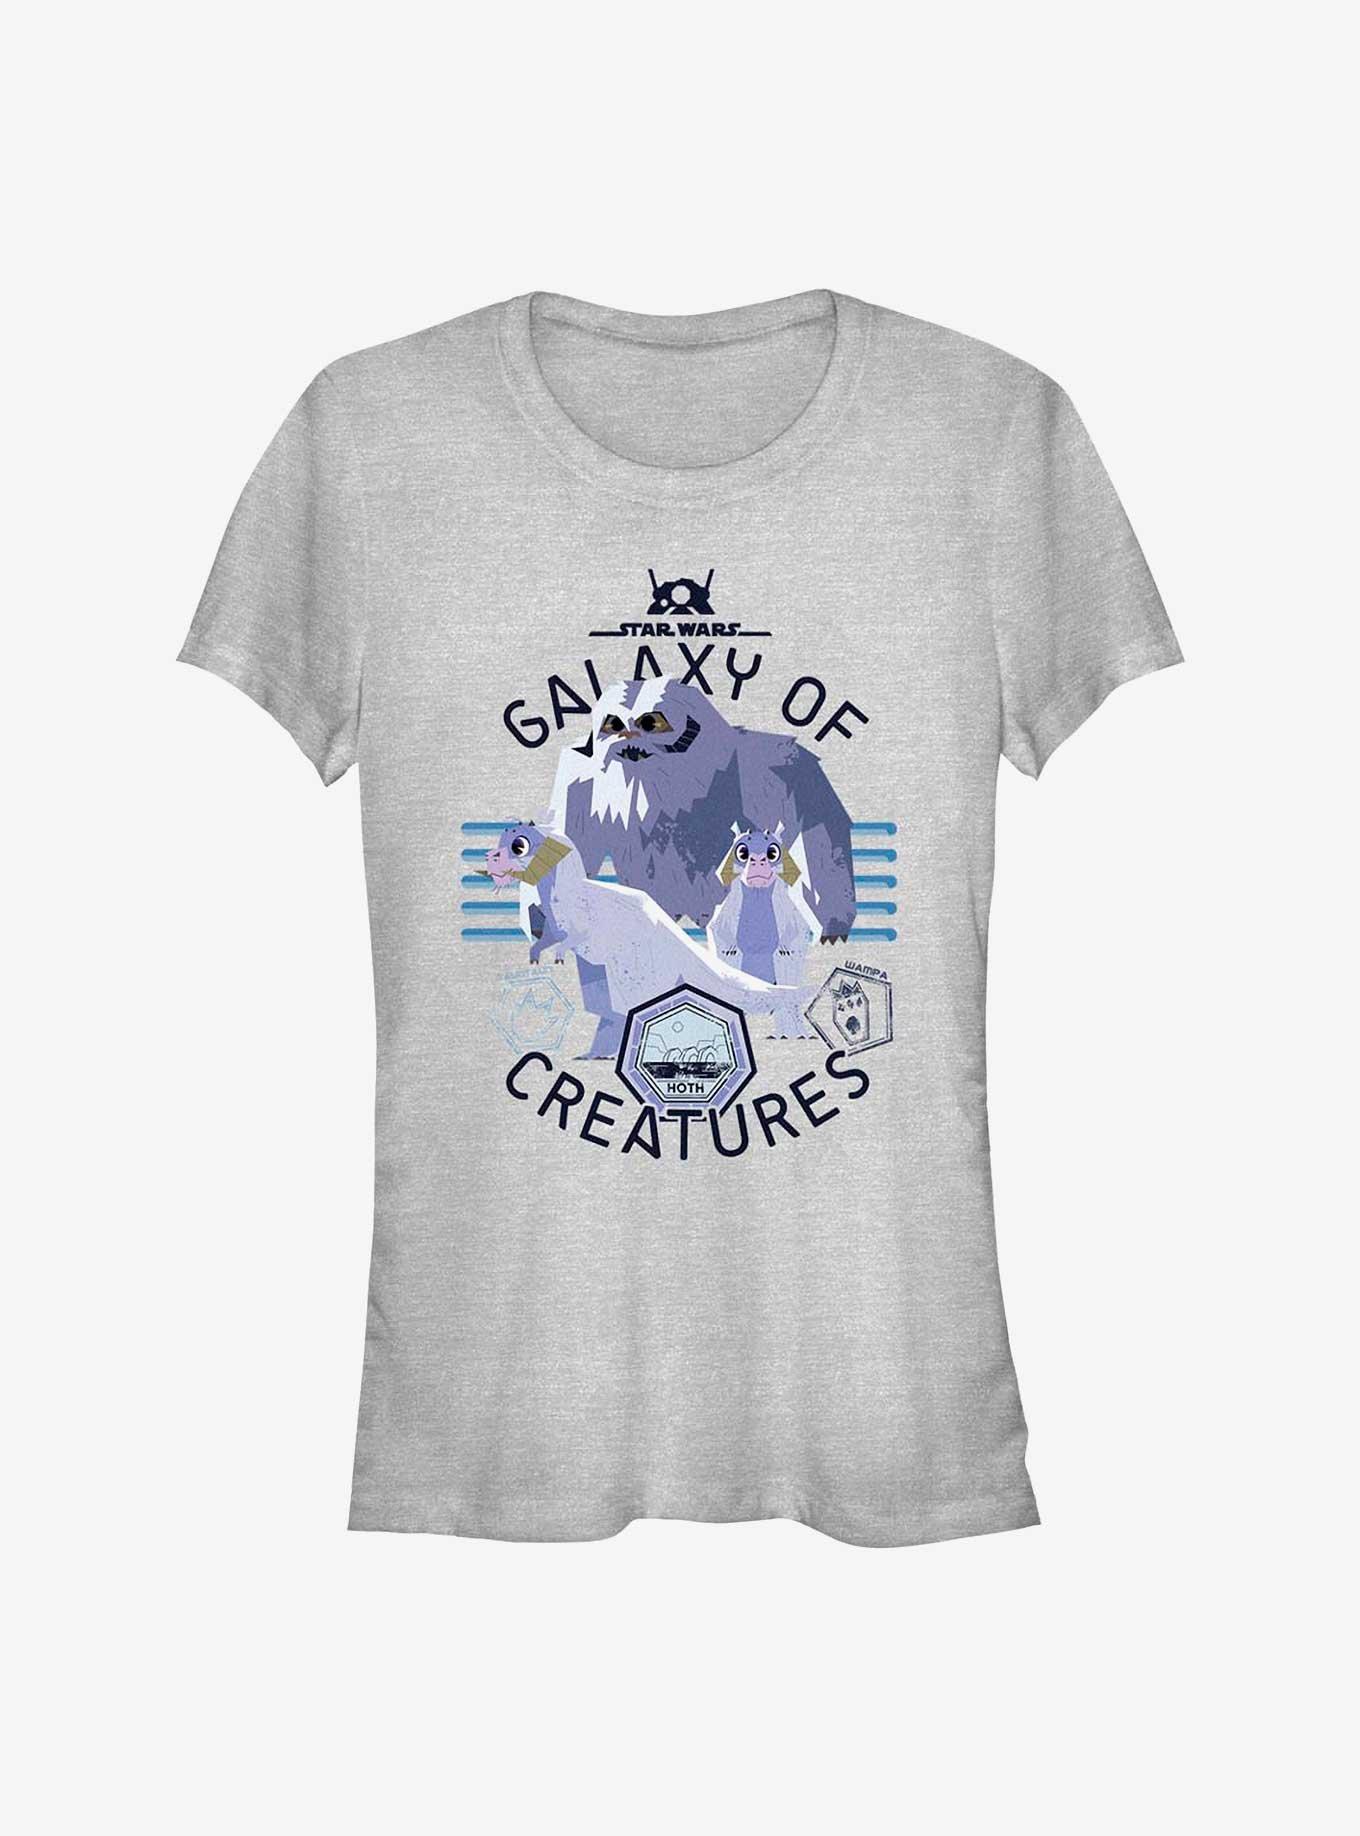 Star Wars: Galaxy Of Creatures Hoth Native Habits Girls T-Shirt, ATH HTR, hi-res